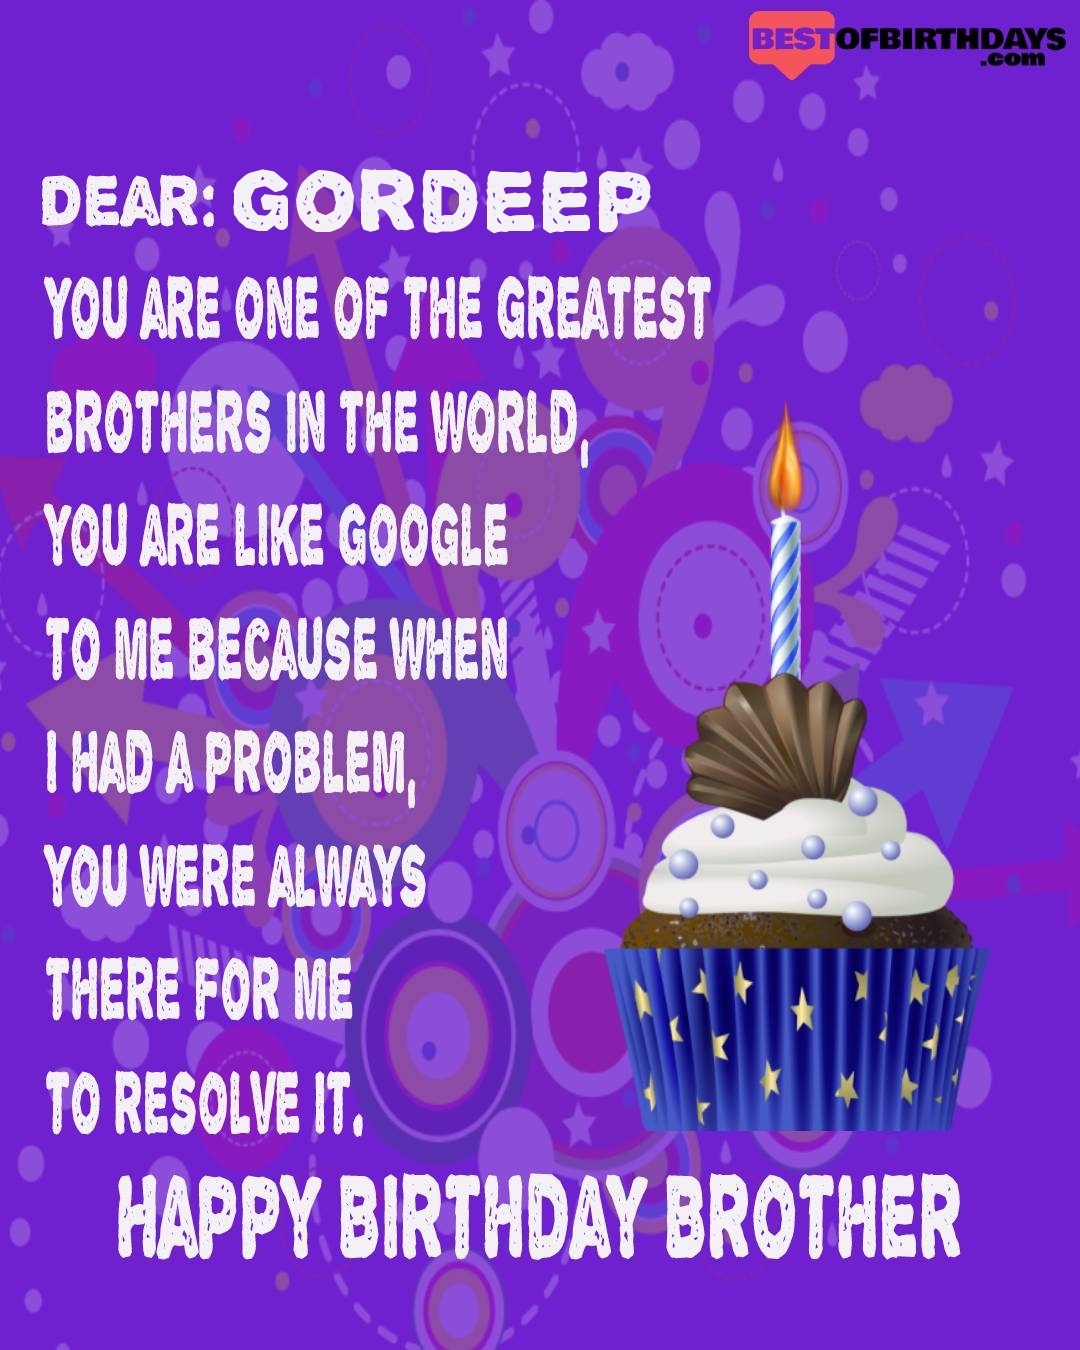 Happy birthday gordeep bhai brother bro